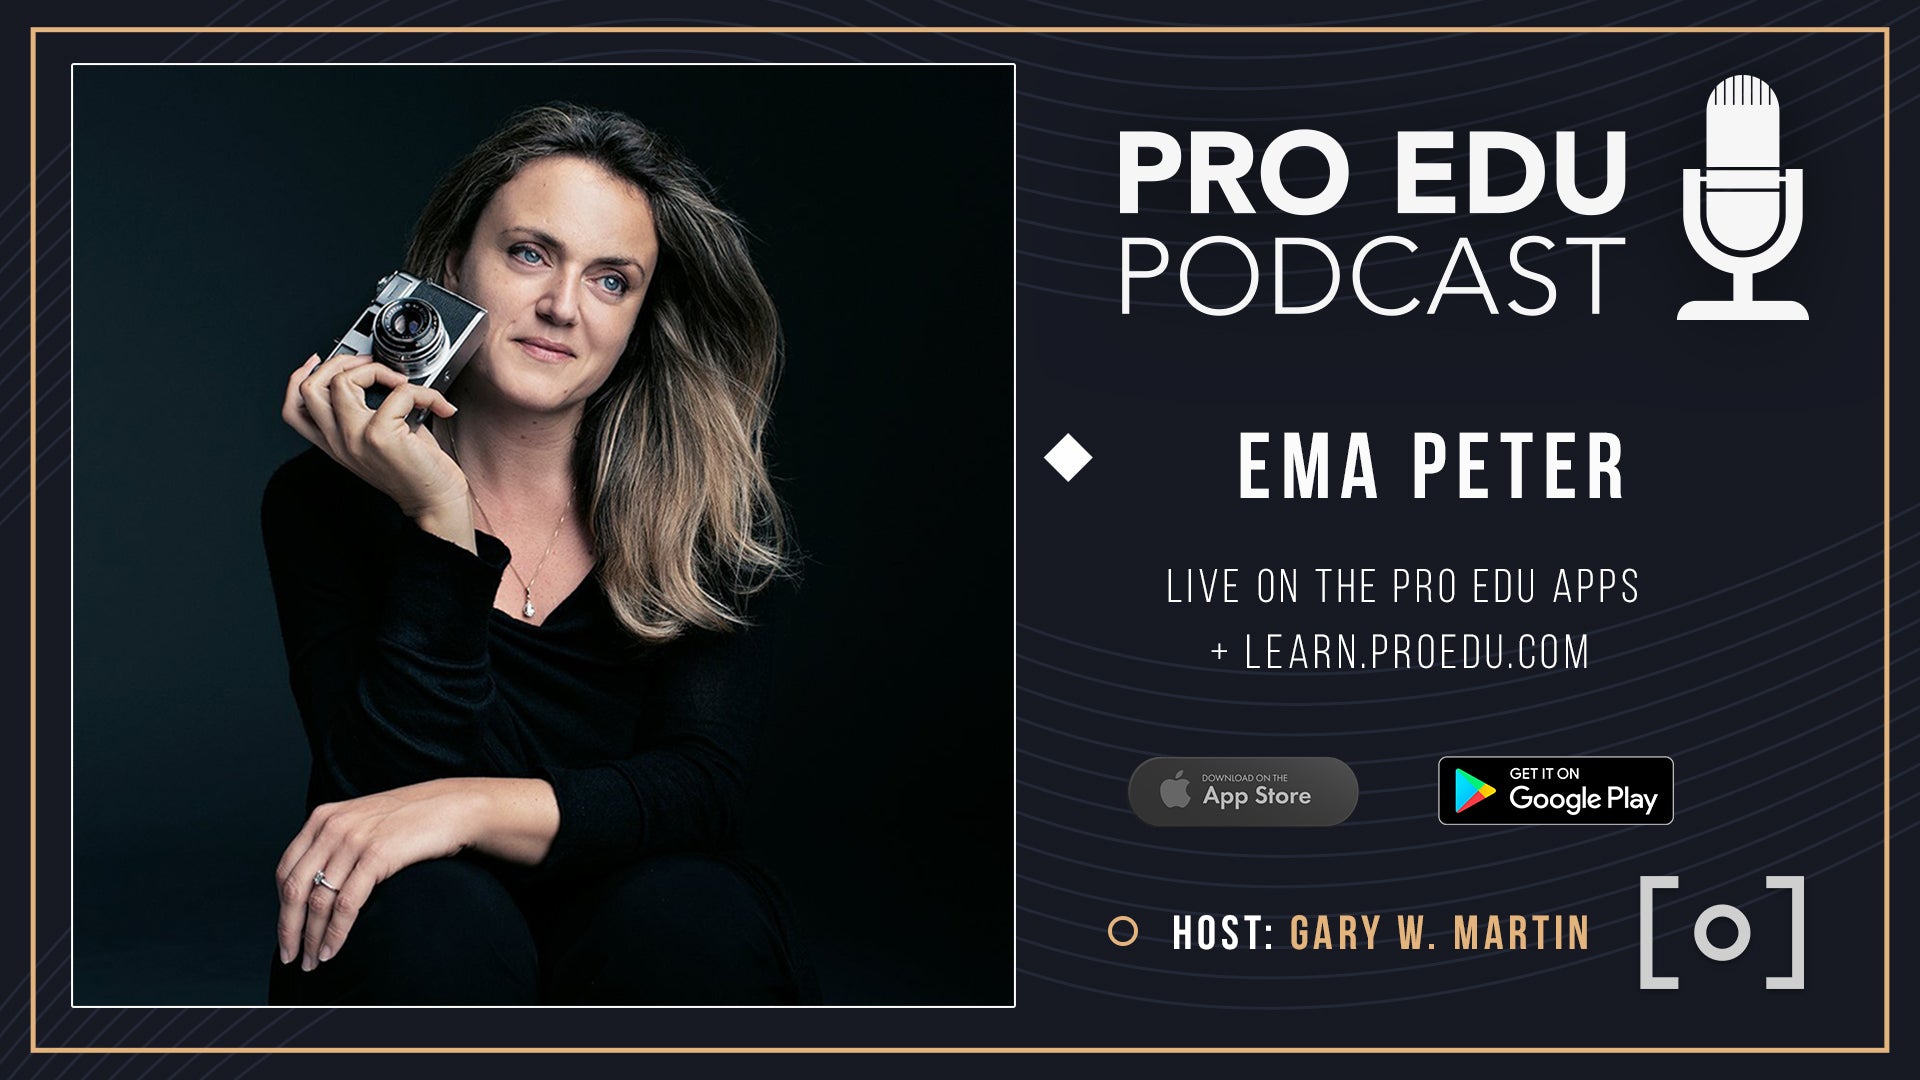 Ema Peter Podcast PRO EDU